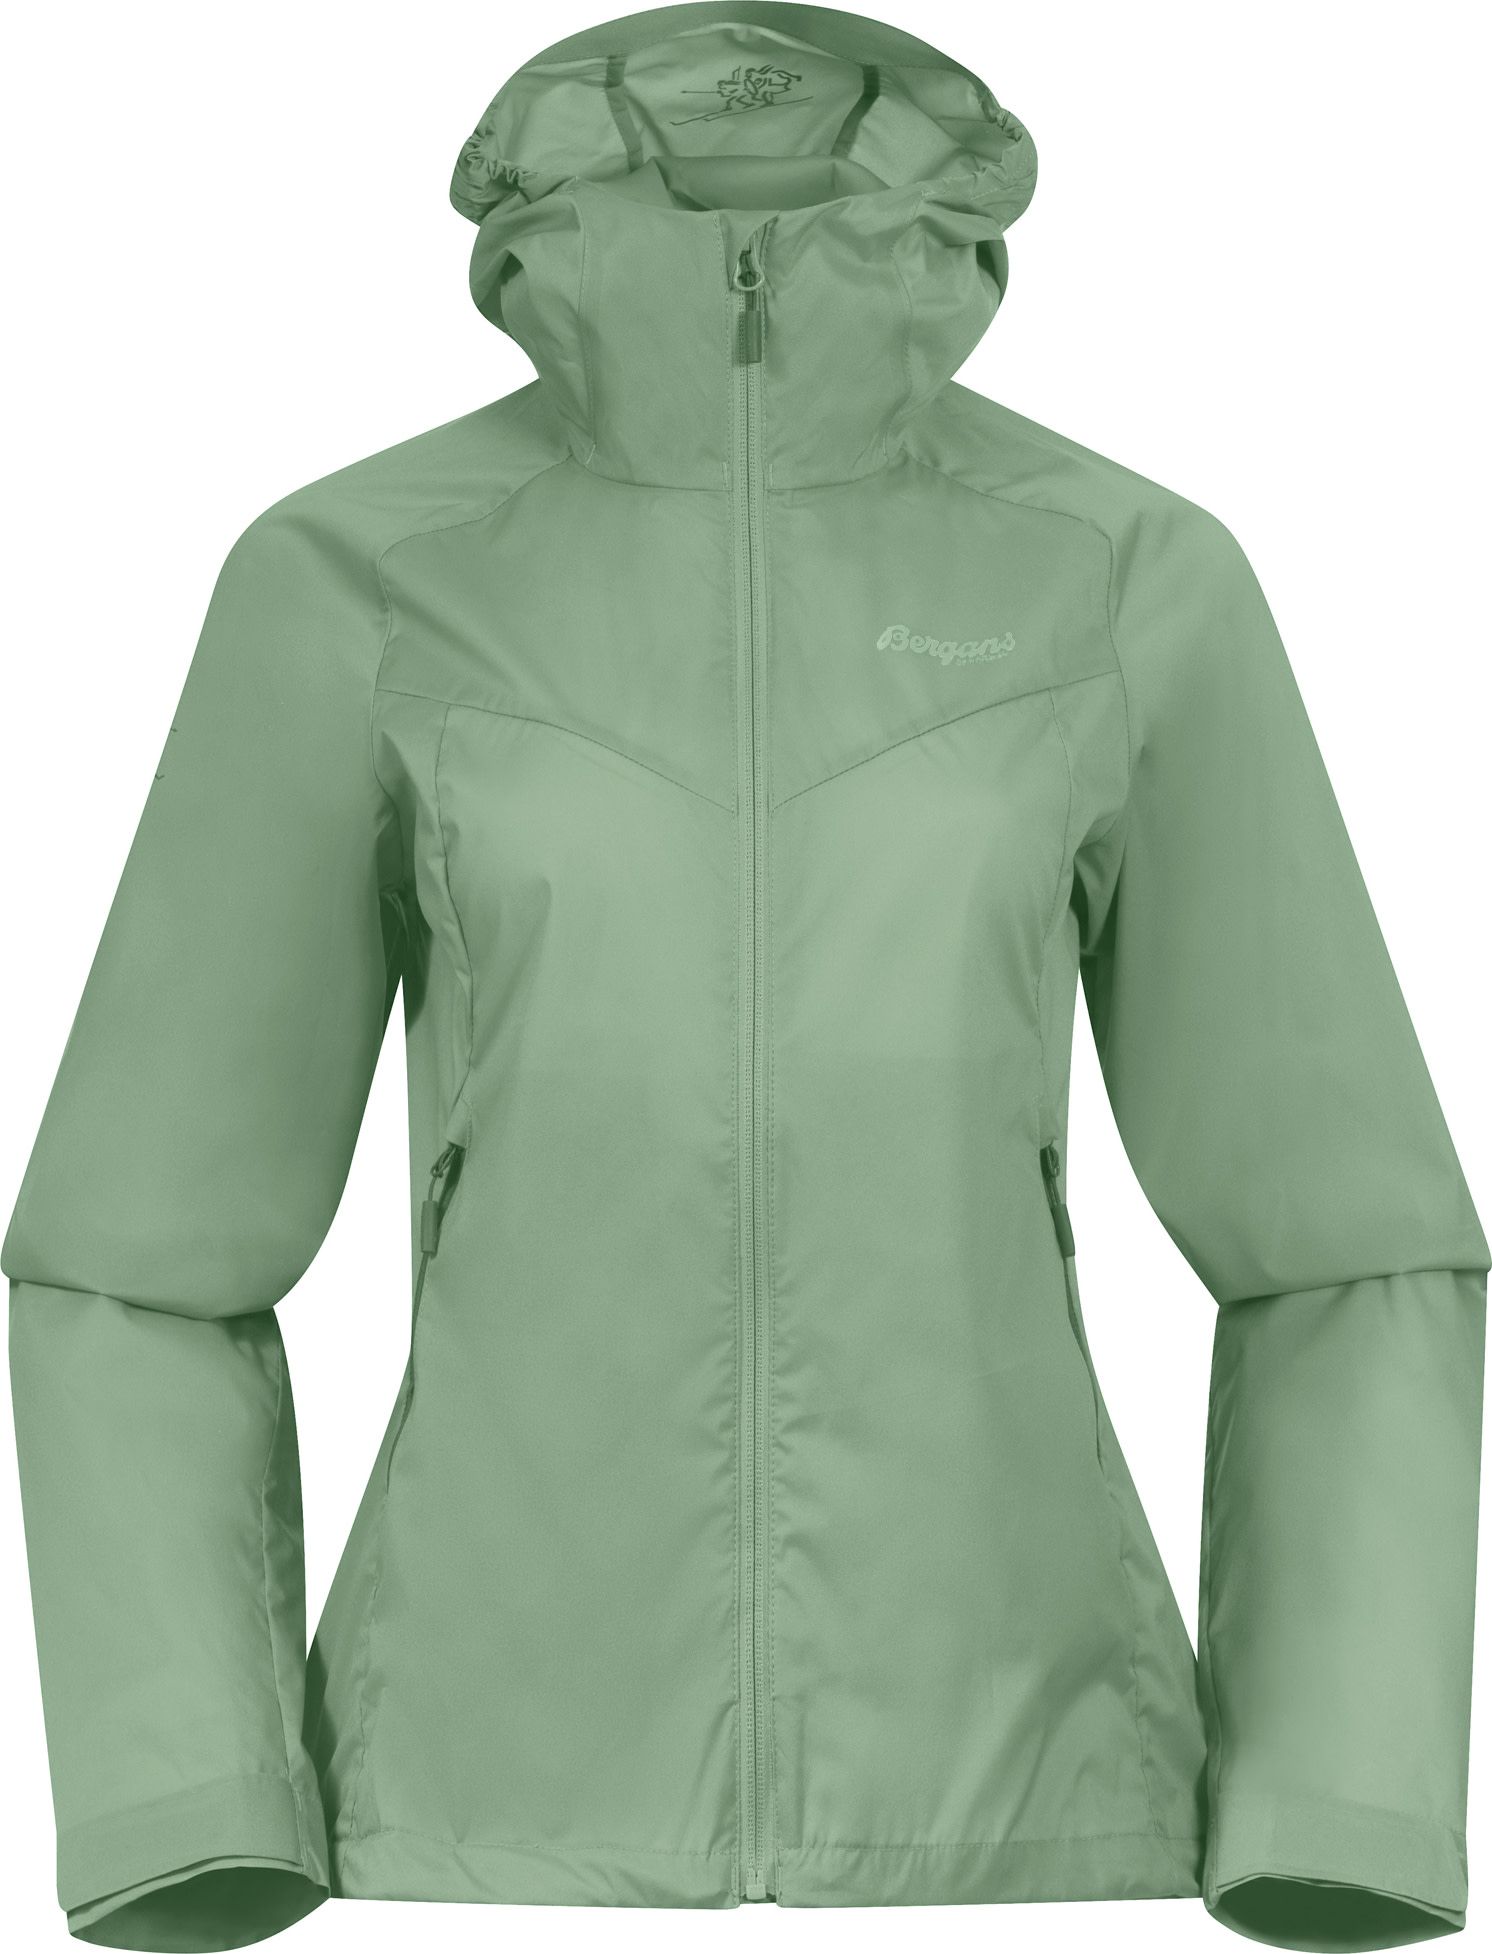 Women's Microlight Jacket Jadegreen